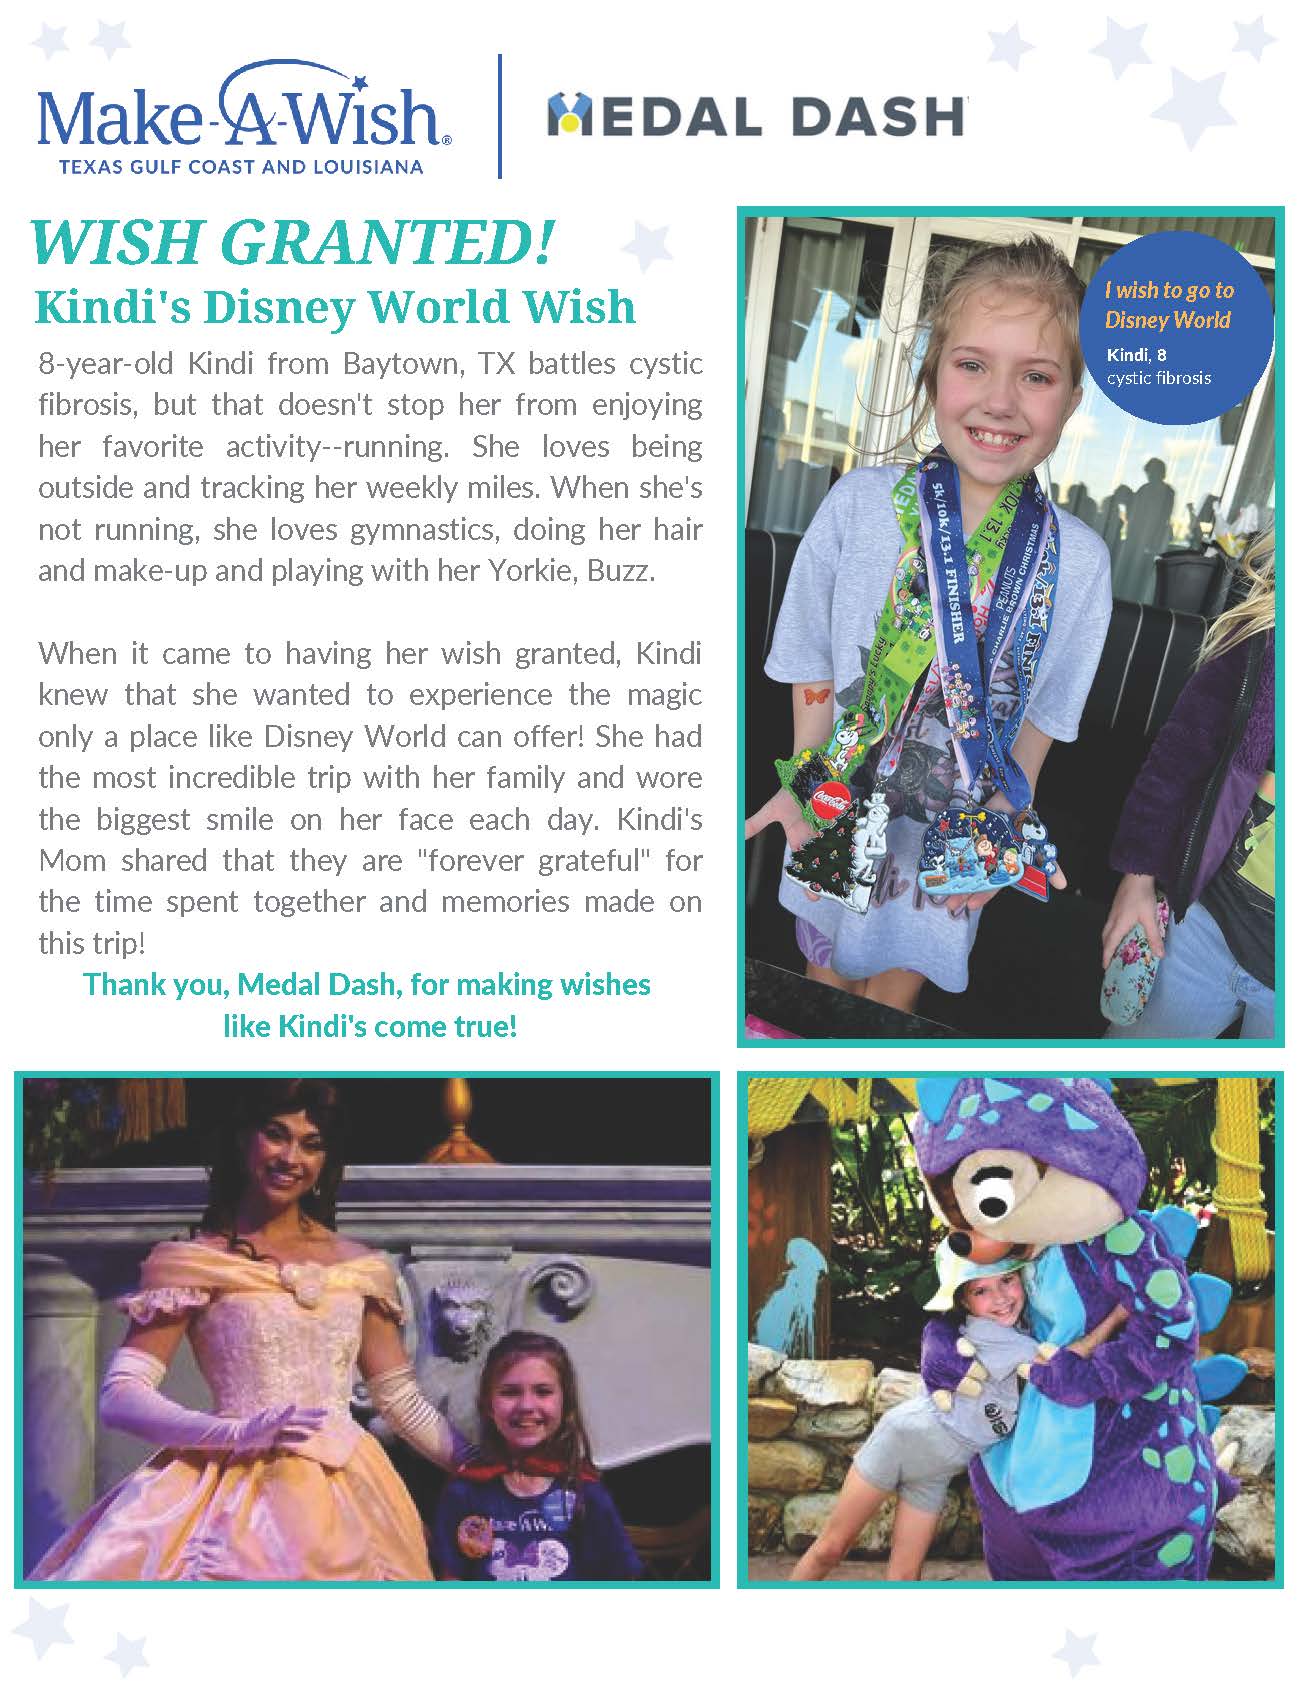 Make a wish granted - 8 year old Kindi from Baytown Texas who had a wish to visit disney